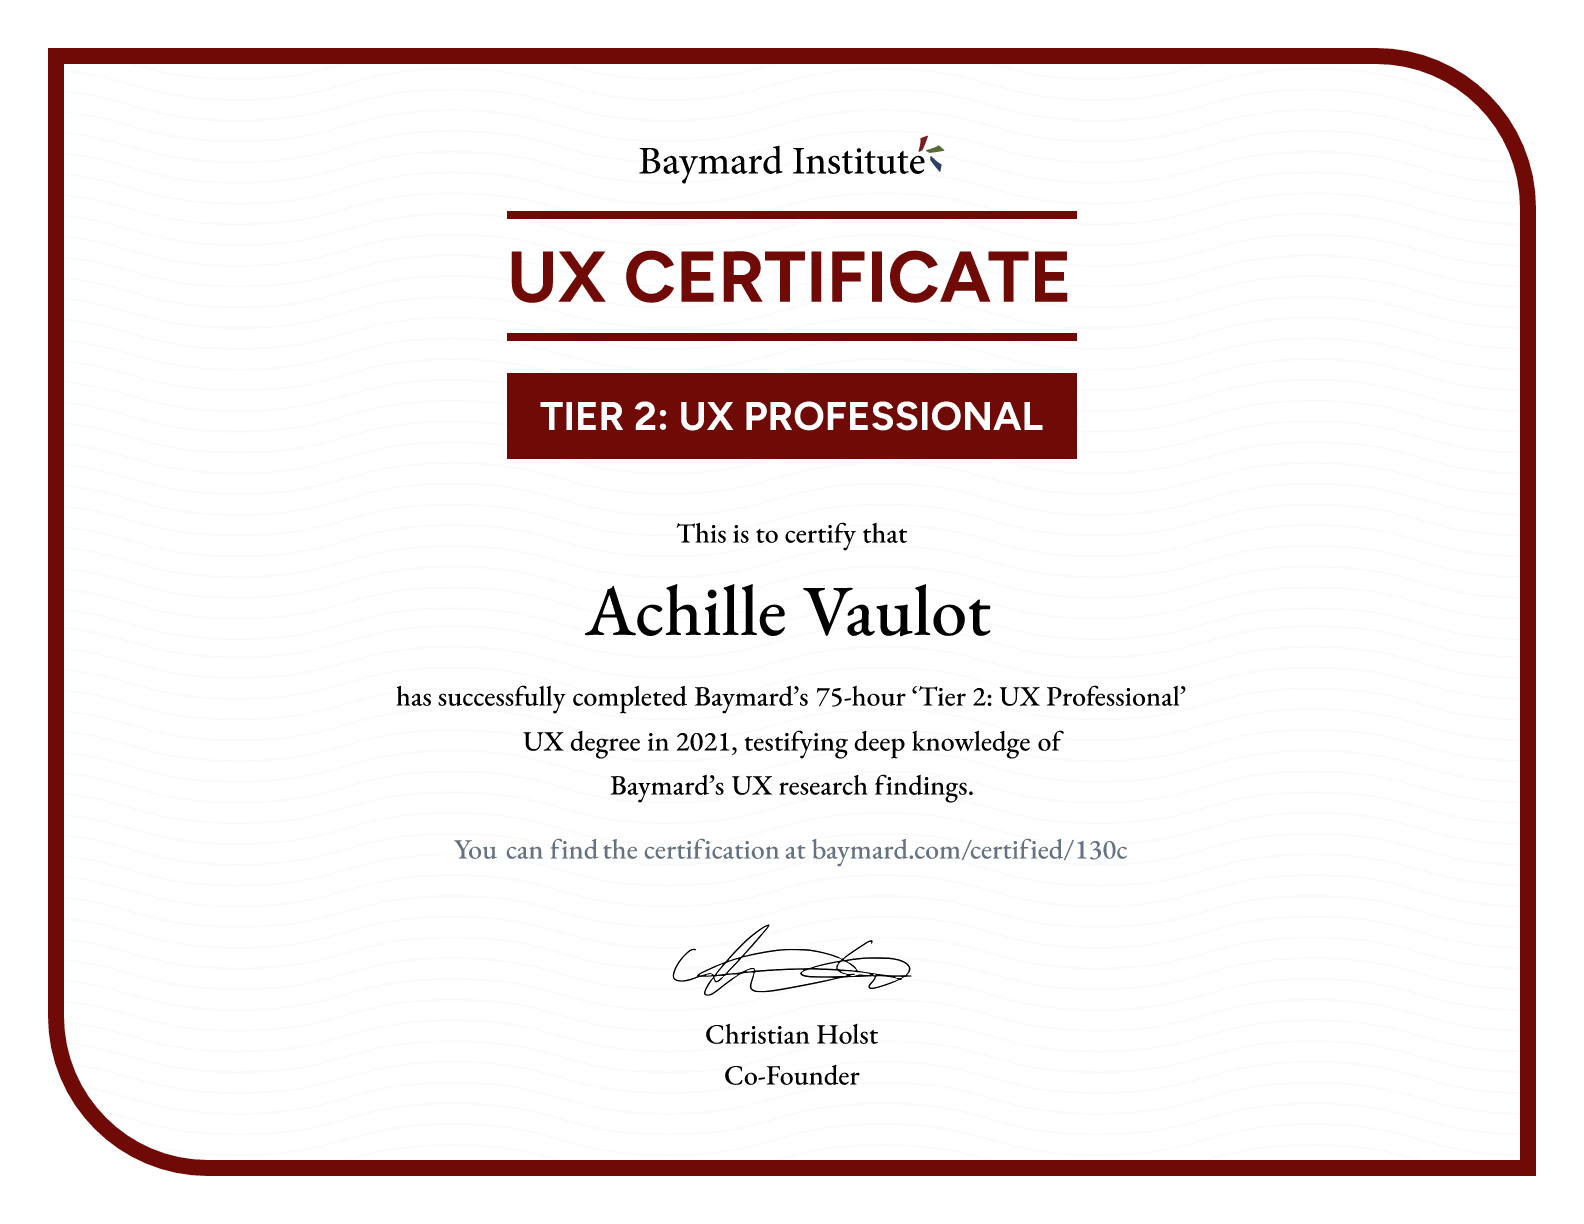 Achille Vaulot’s certificate